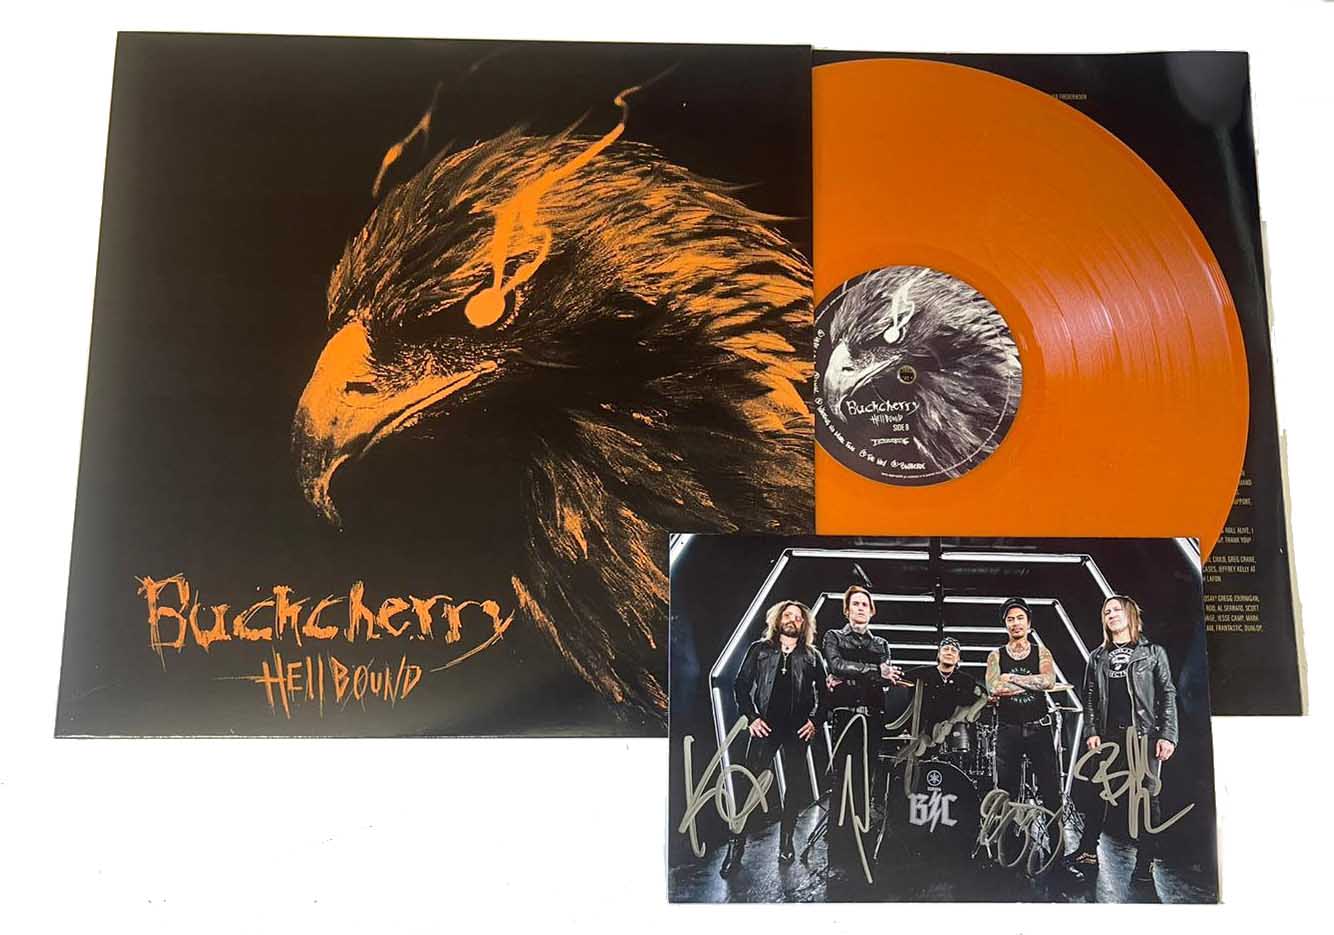 Buckcherry "Hellbound" SIGNED Orange Vinyl w/ Unique Orange Cover